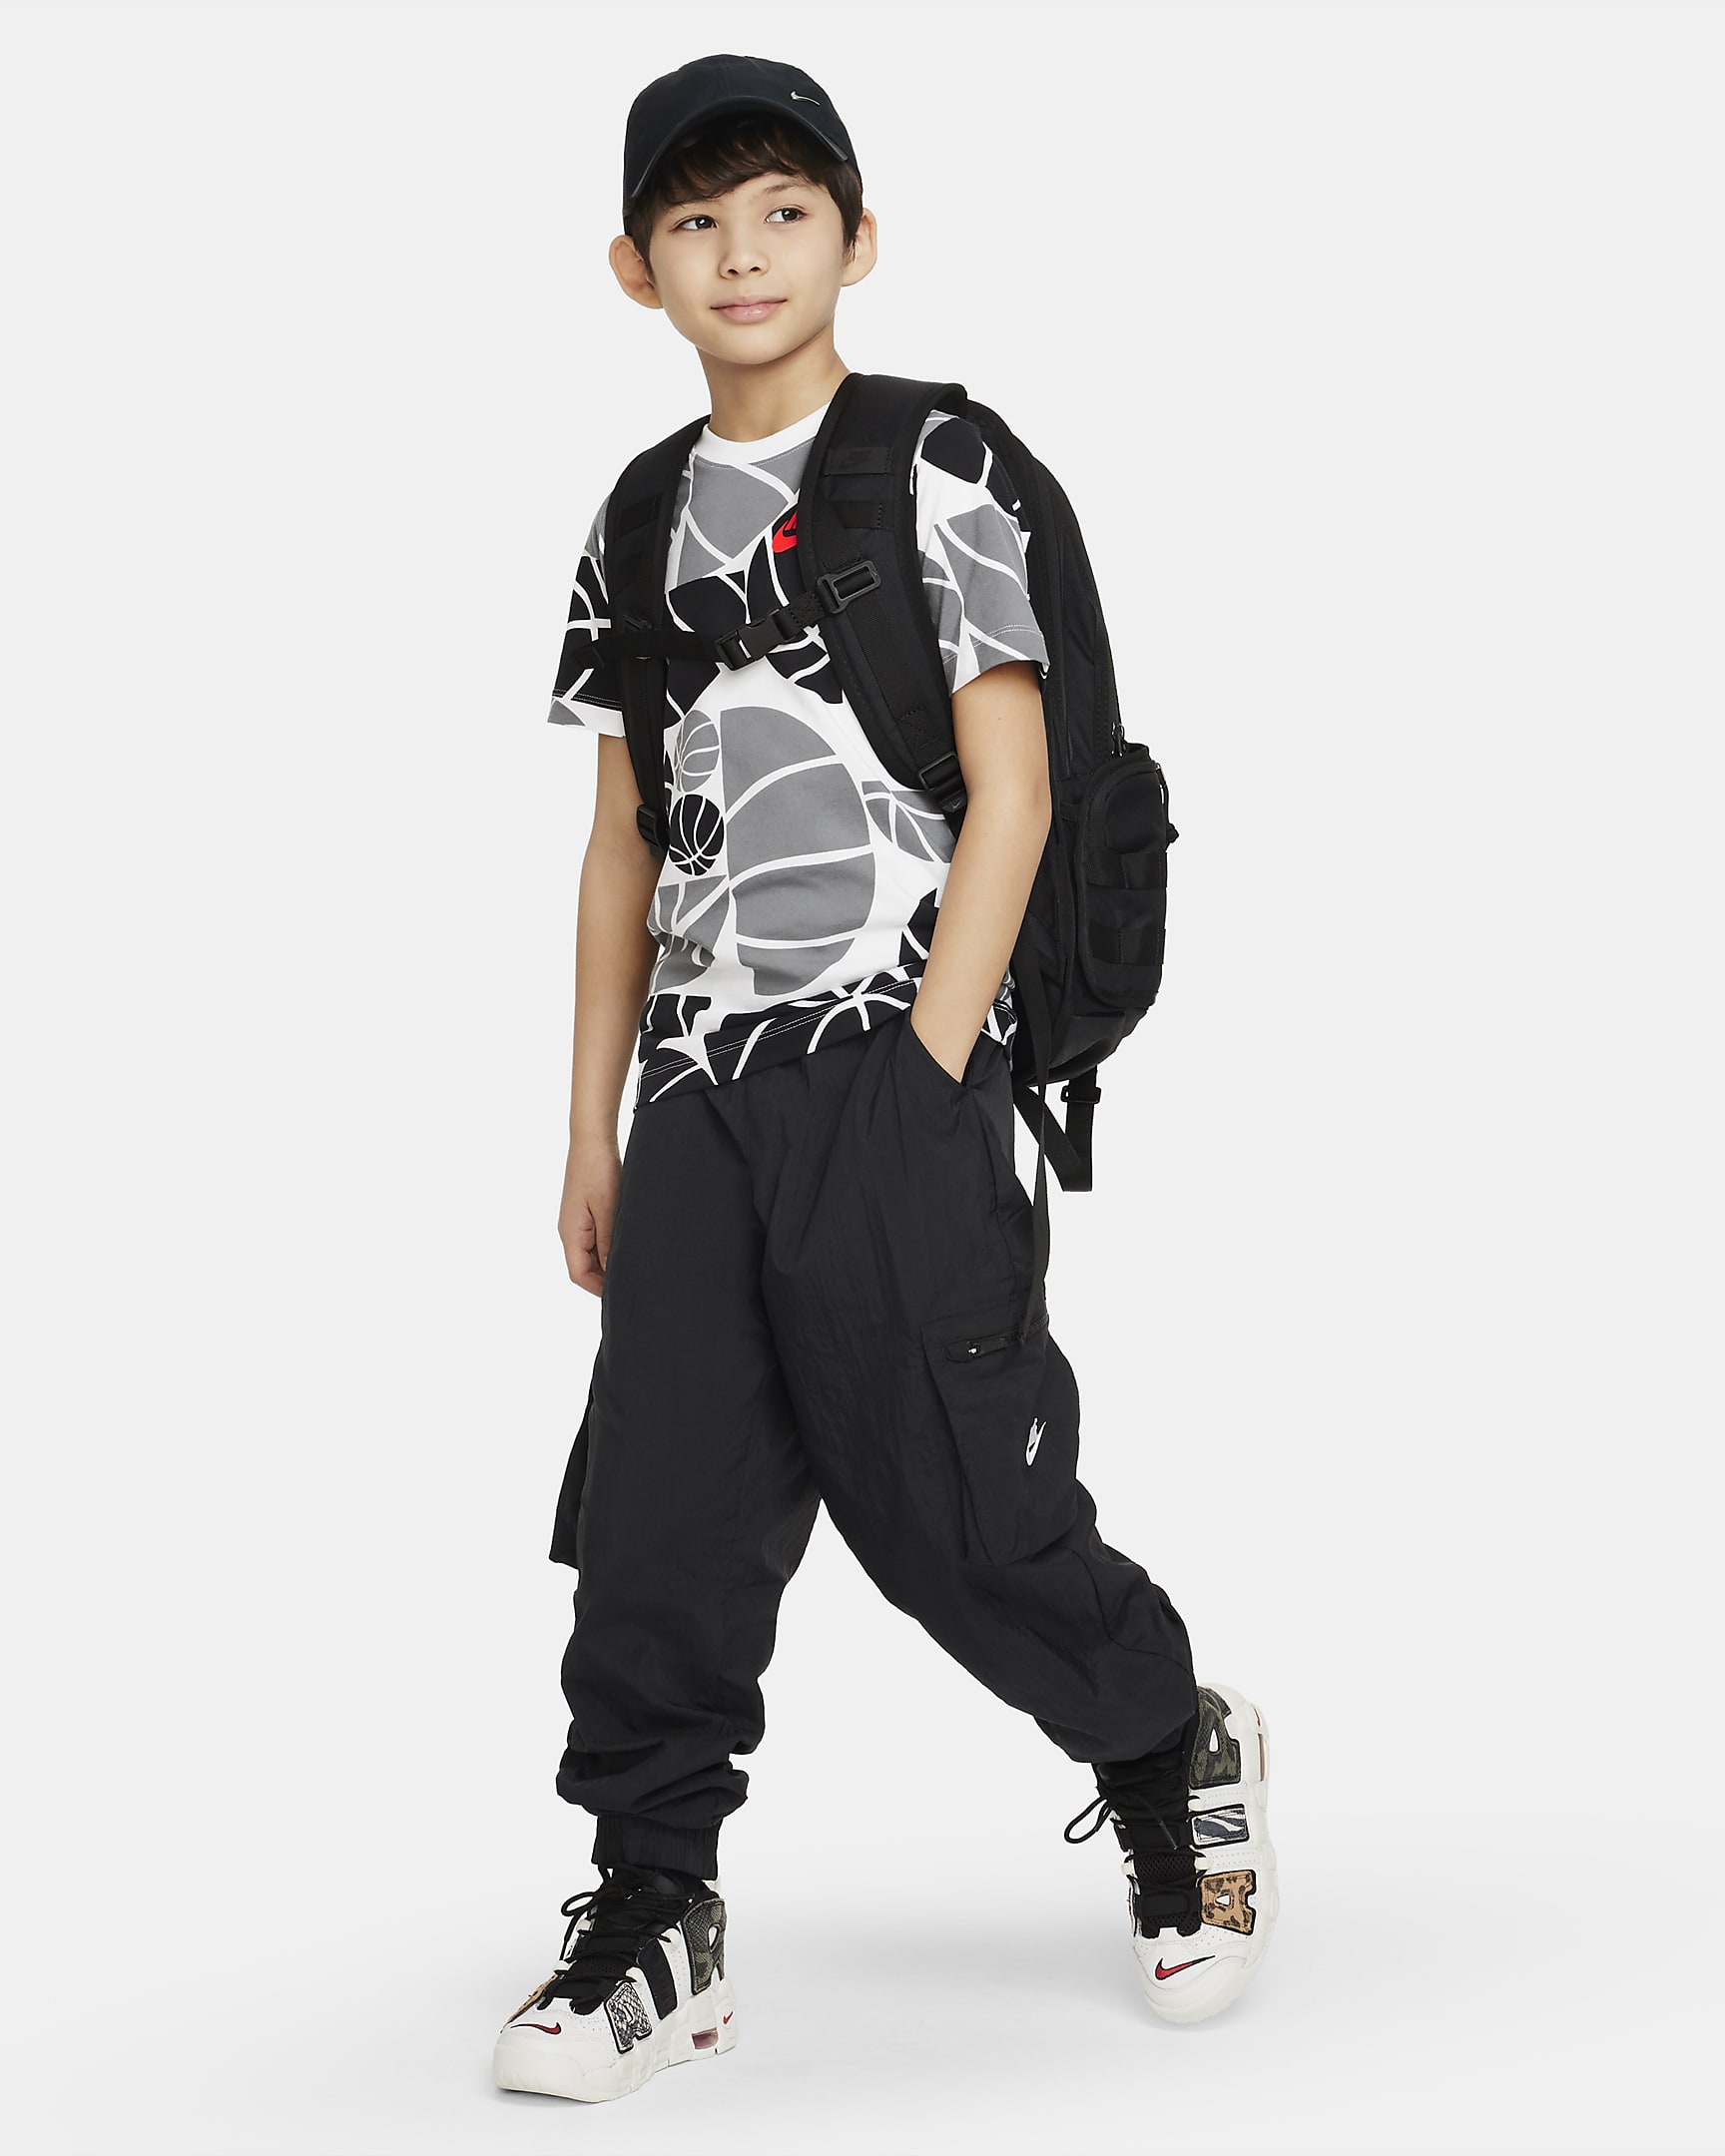 Nike Sportswear Culture of Basketball Older Kids' (Boys') T-Shirt. Nike ID